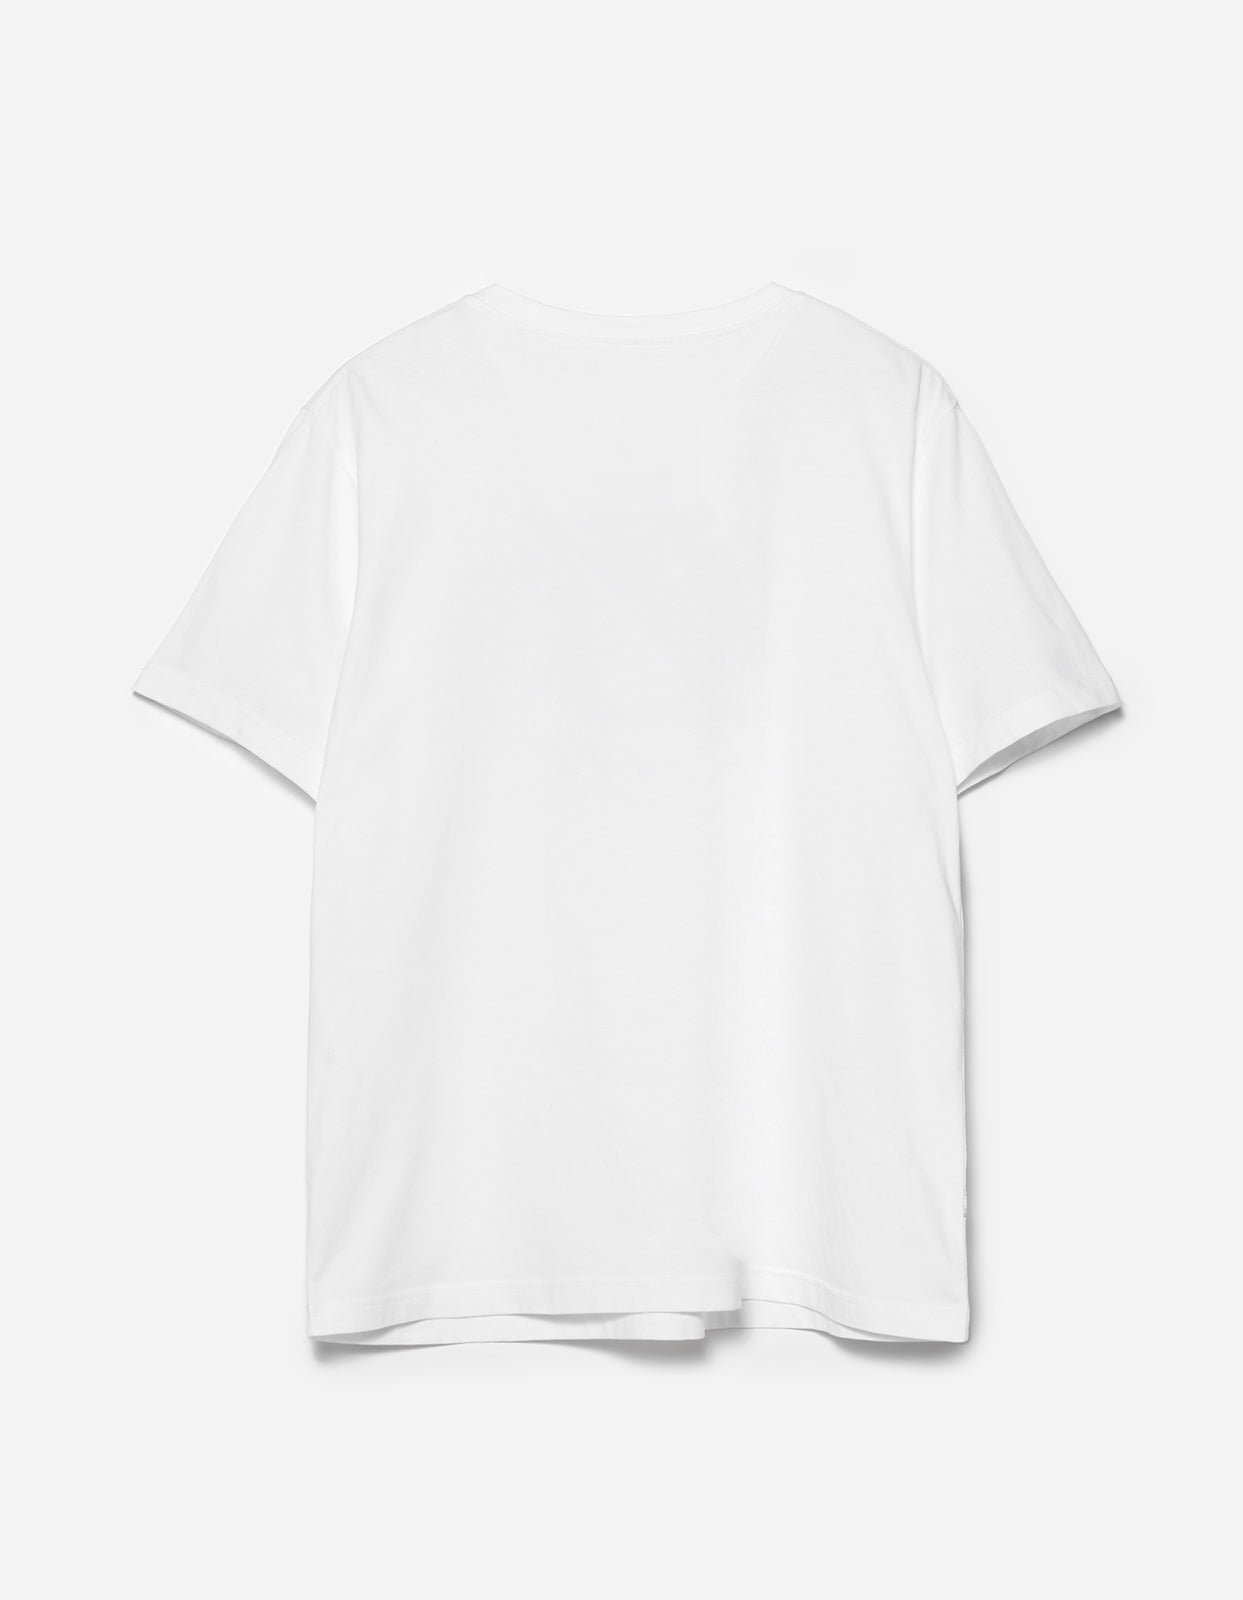 1353 Maharishi Bonsai T-Shirt White